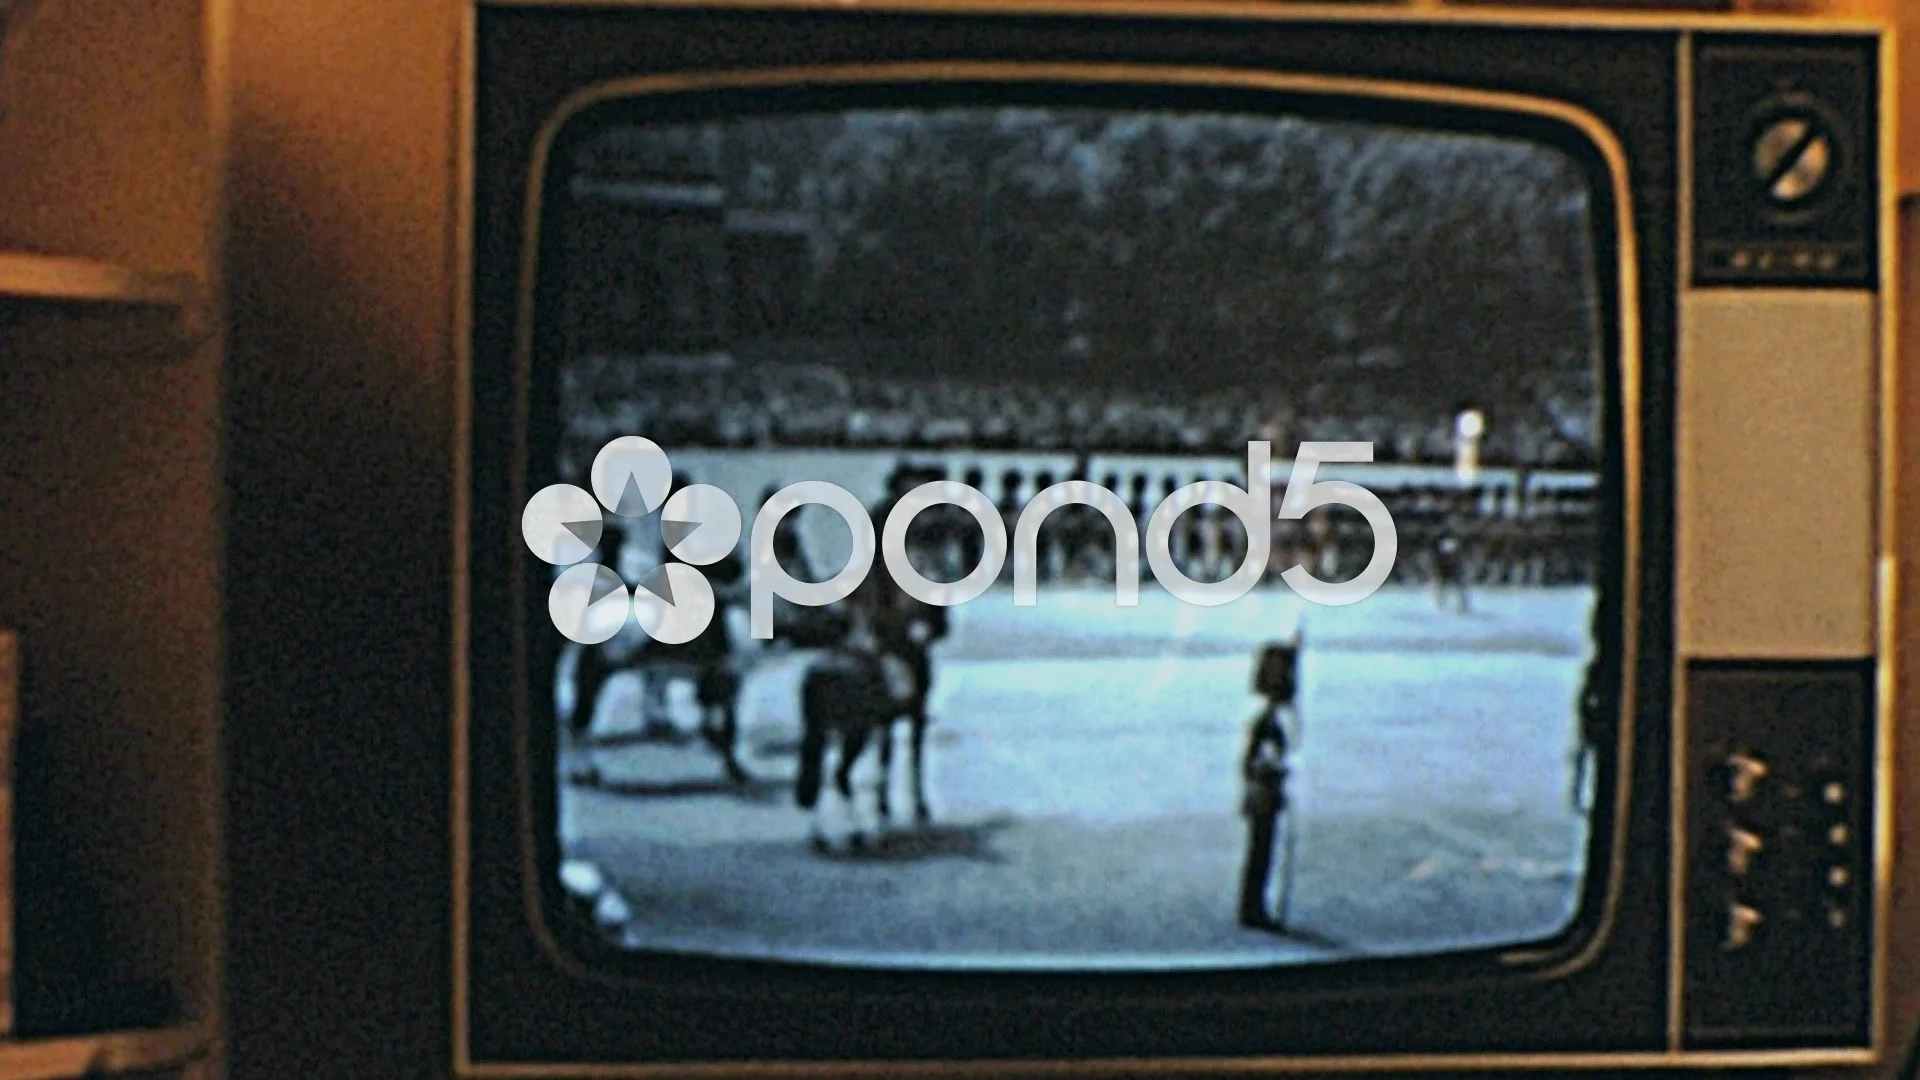 1960s television set